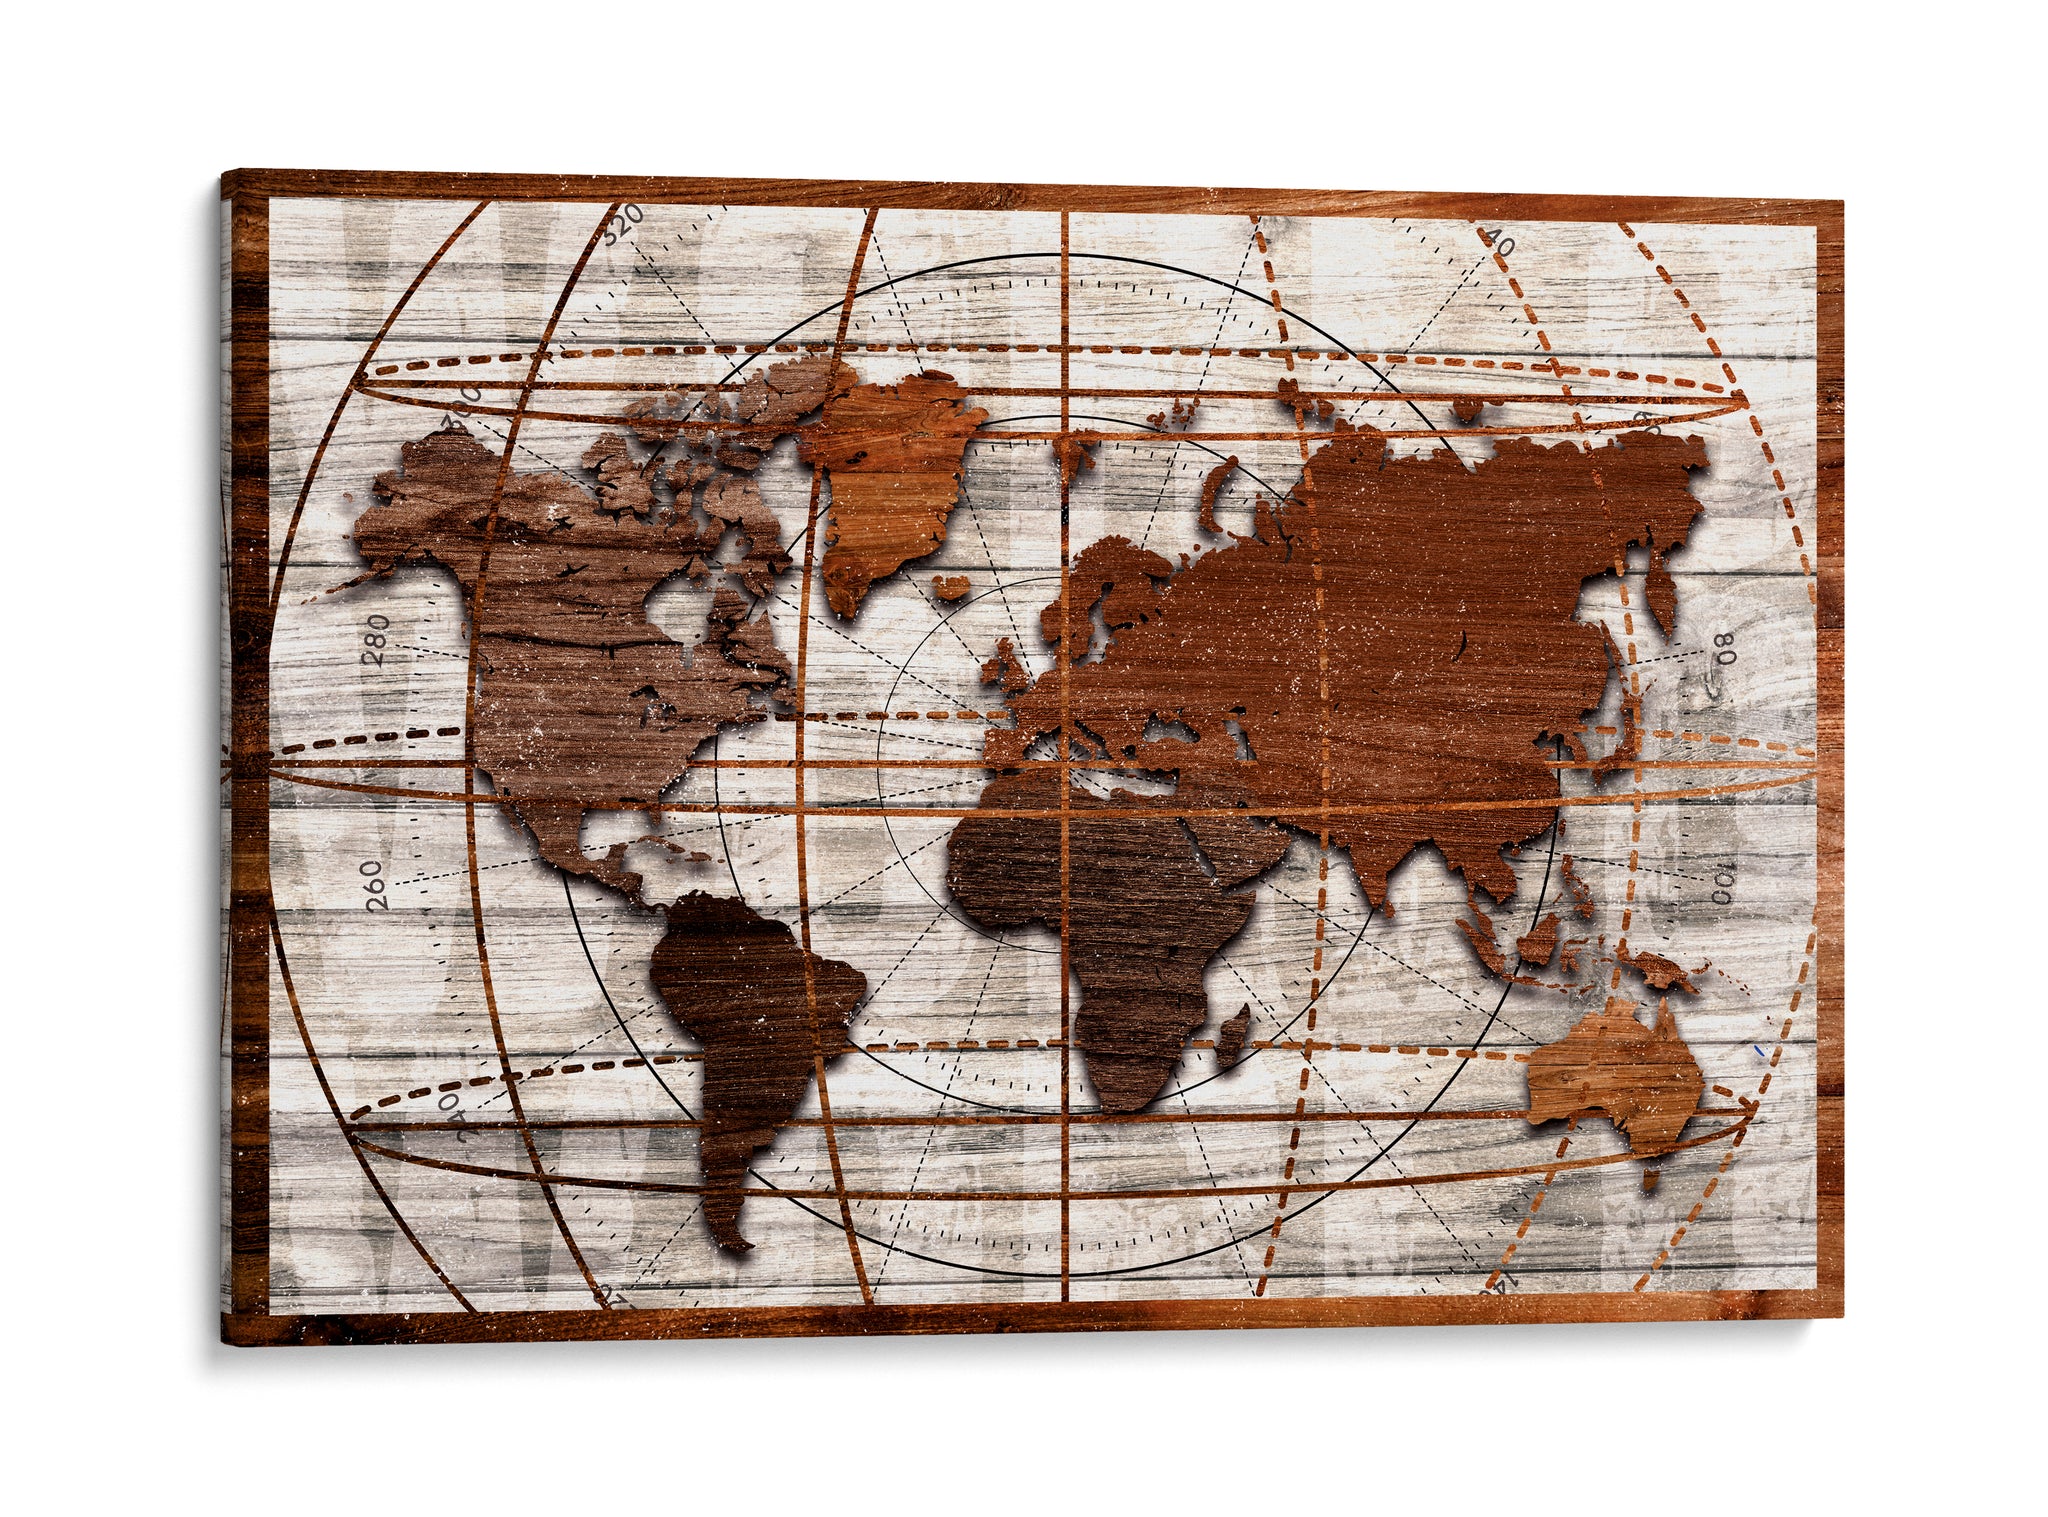 Wooden World Map Wood Print